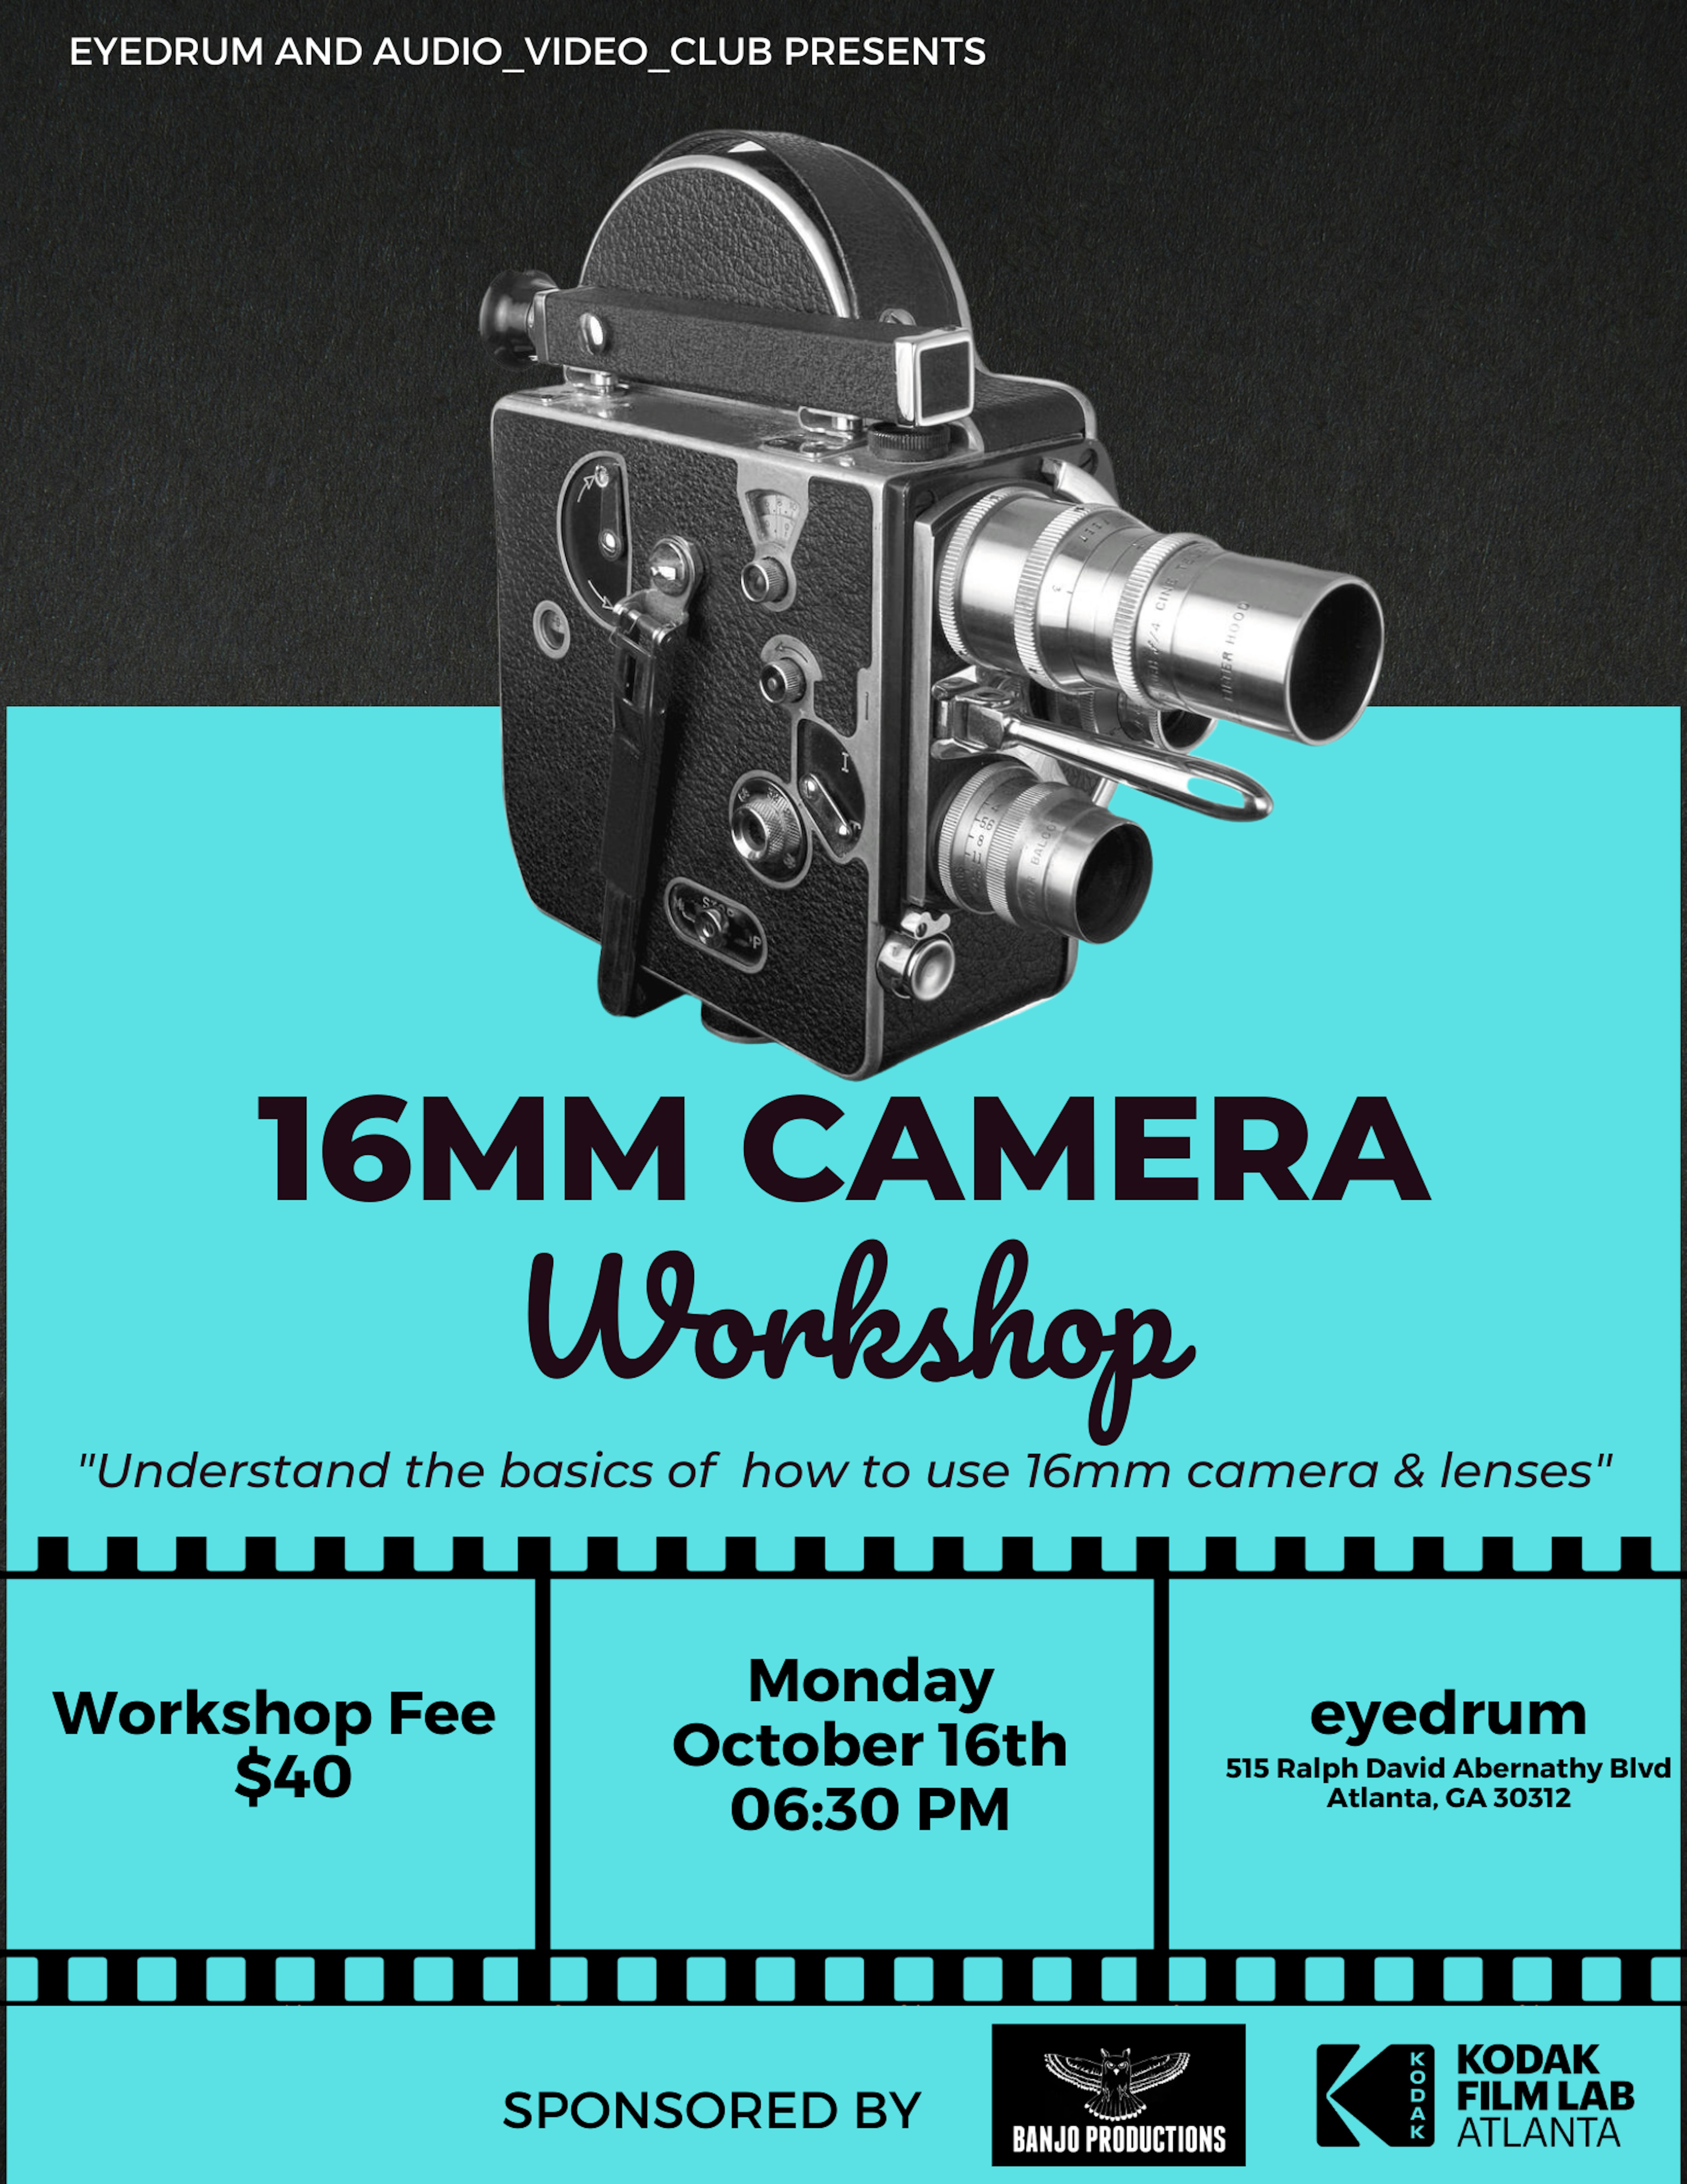 eyedrum and Audio Video Club present "16mm Camera Workshop"